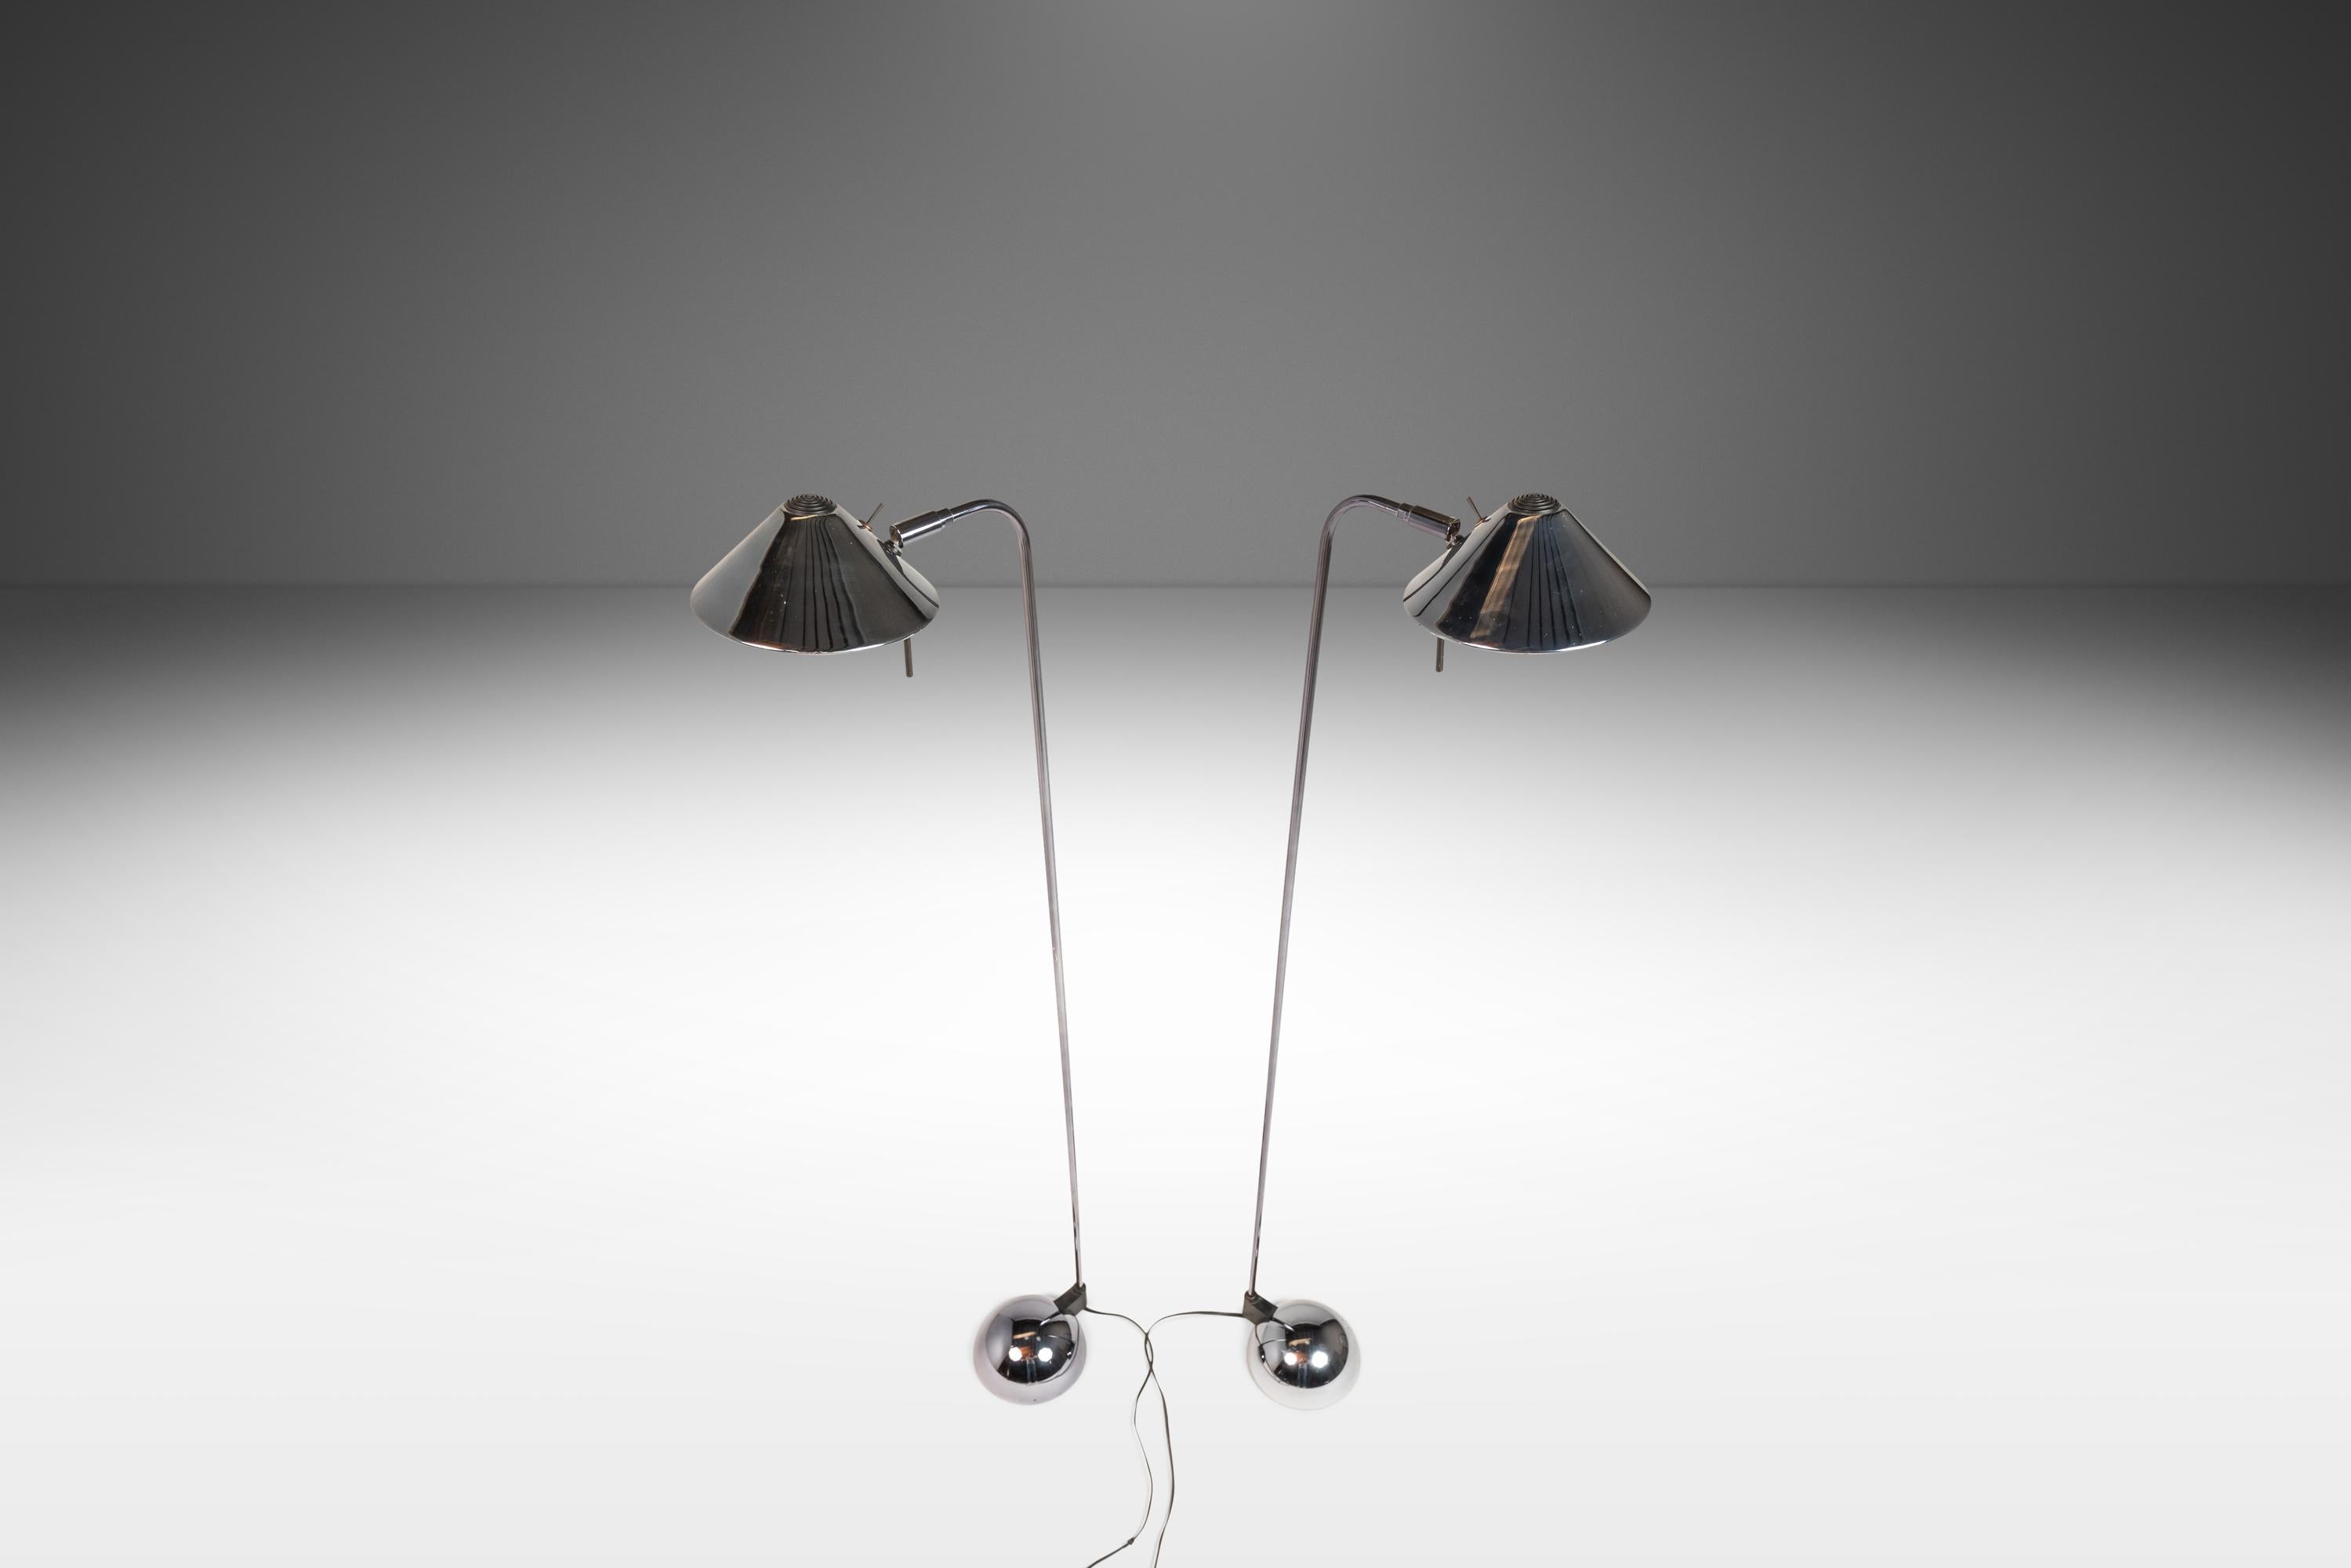 Set of 2 Post Modern Floor Lamps by Robert Sonneman for George Kovacs, c. 1987 For Sale 7